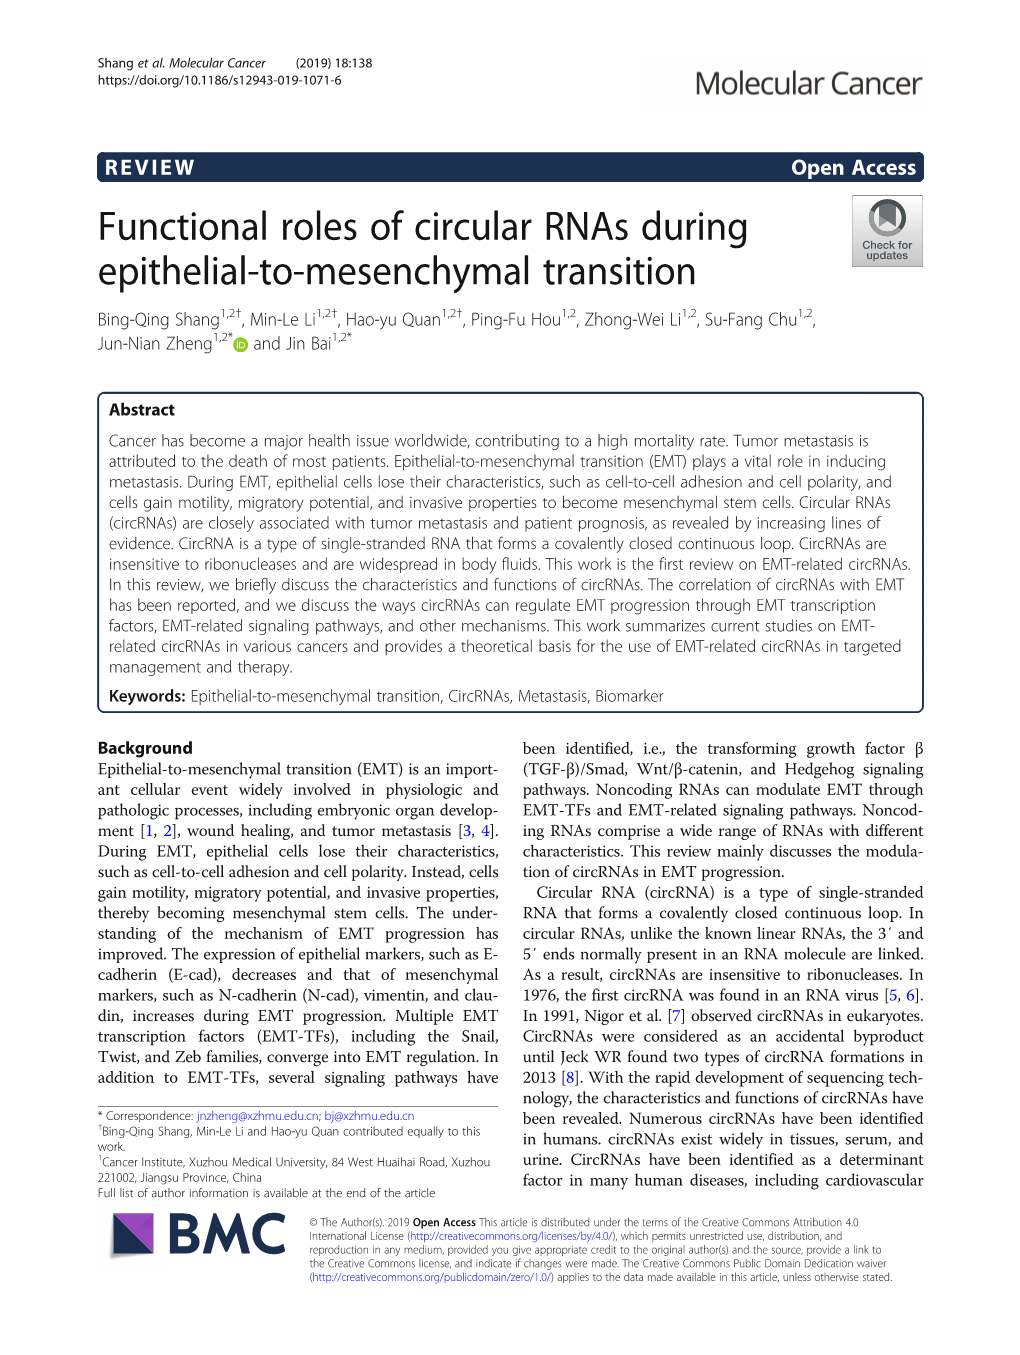 Functional Roles of Circular Rnas During Epithelial-To-Mesenchymal